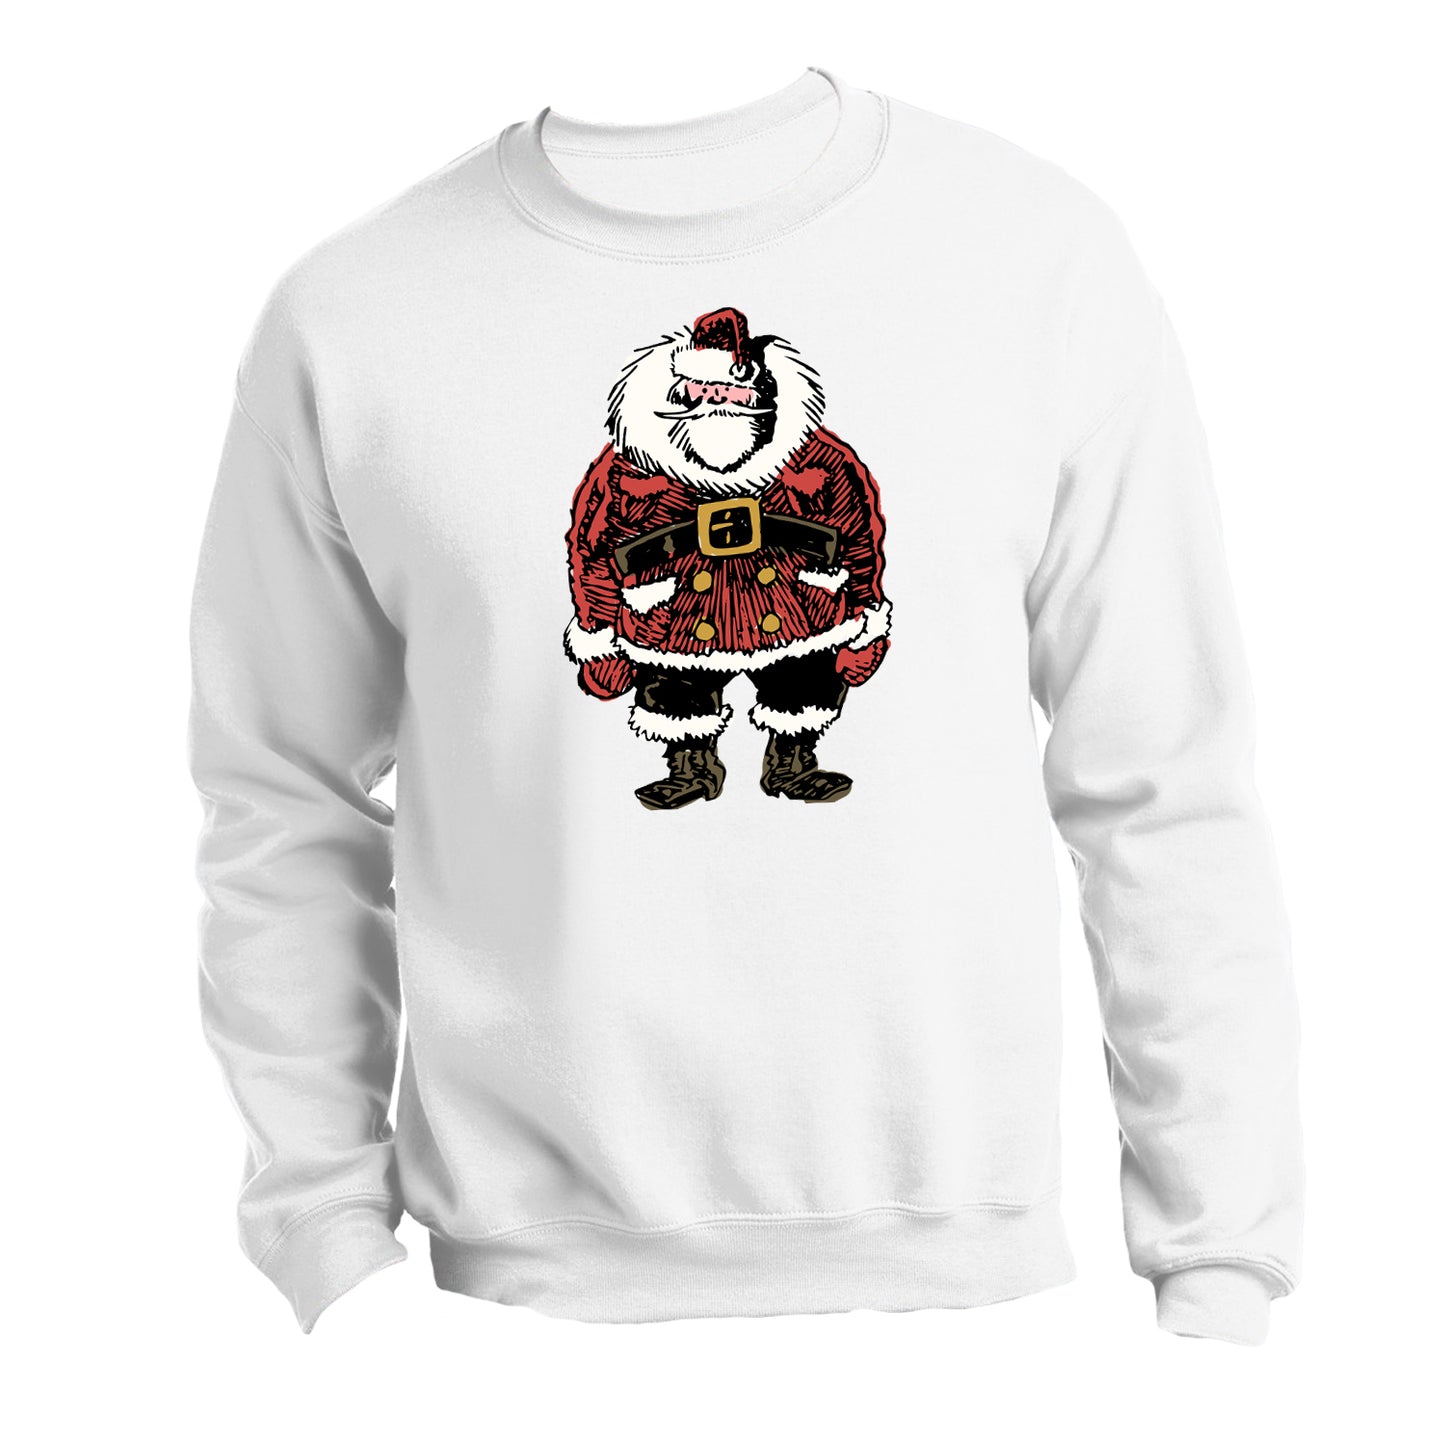 "Here We Go Again, Santa" - Sweatshirt OR T-shirt